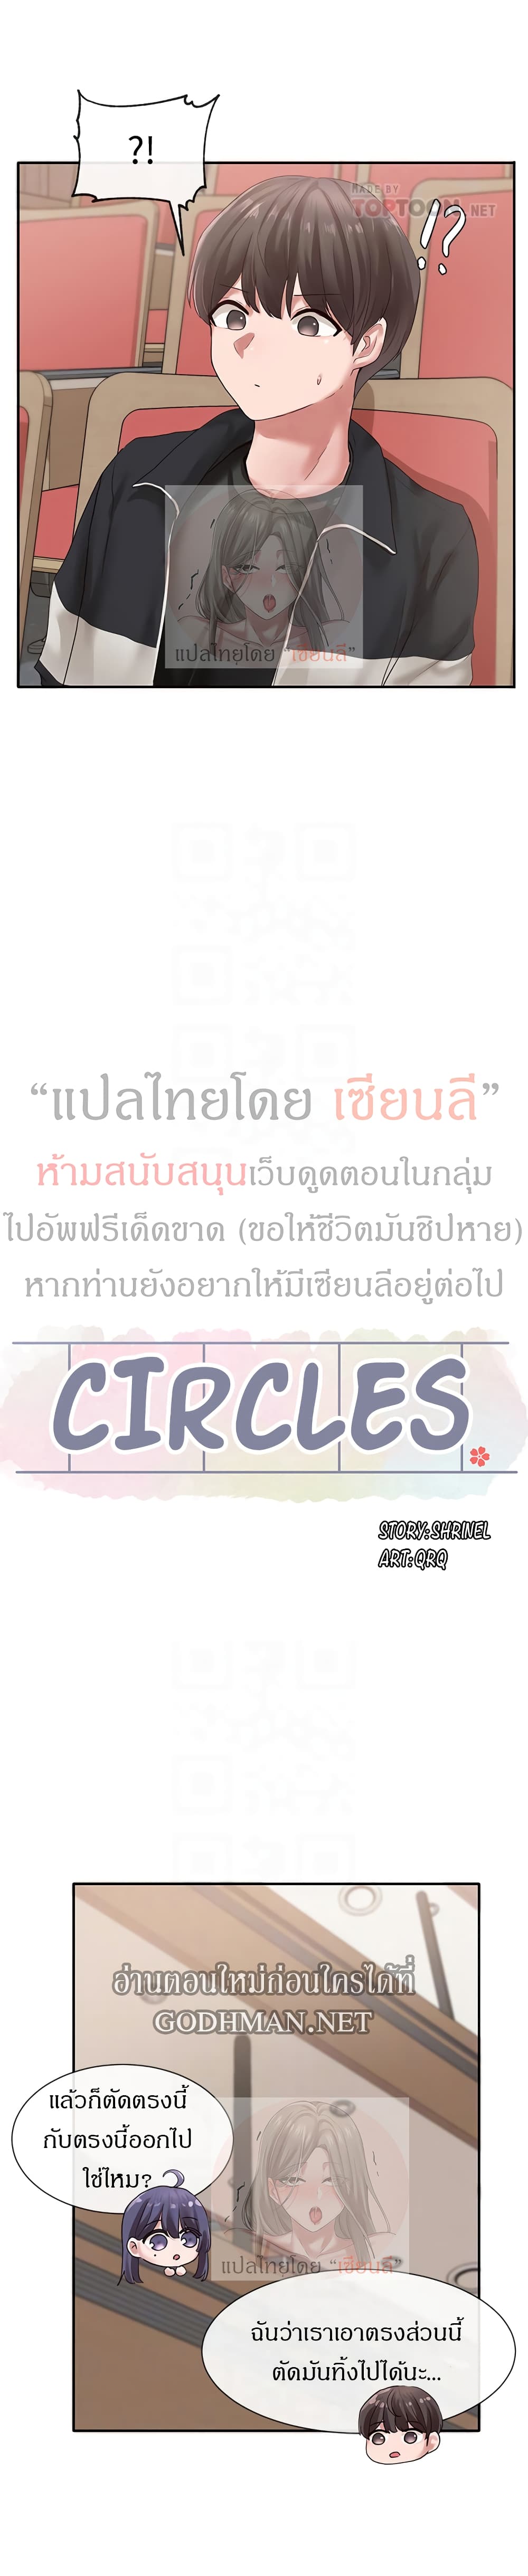 Theater-Society-Circles-37_18.jpg